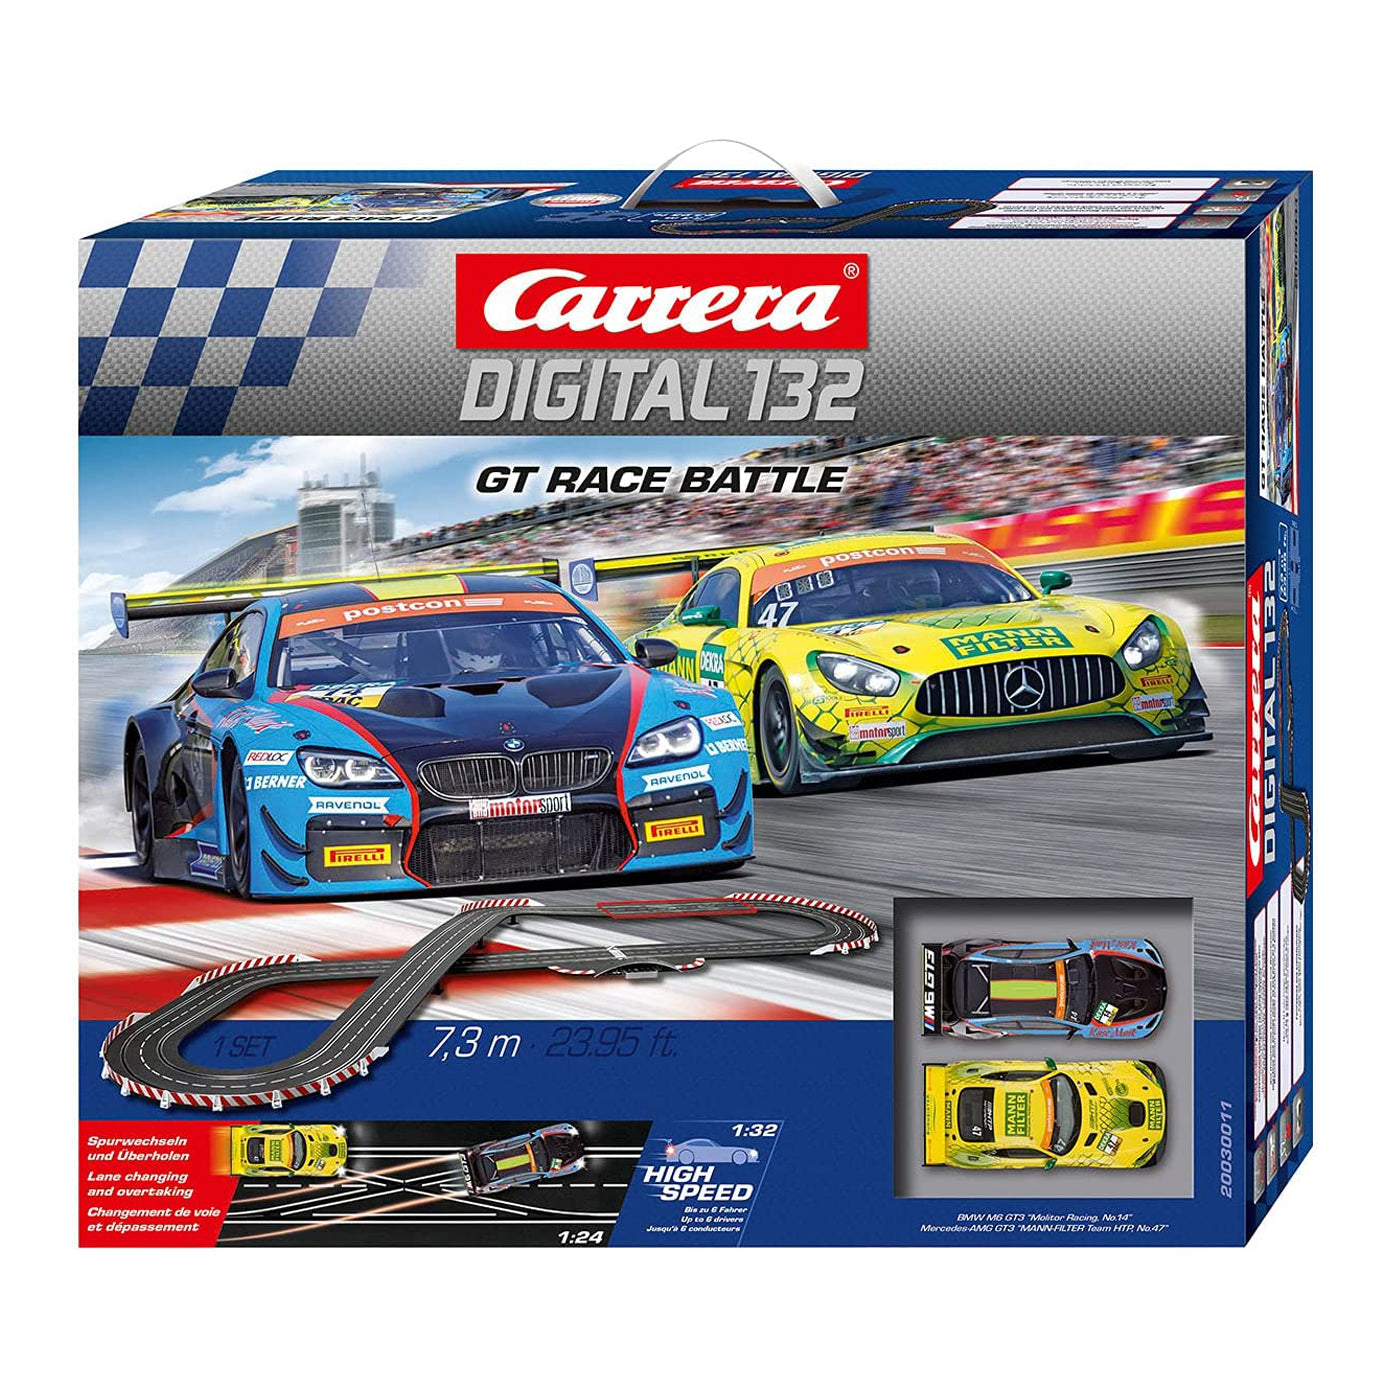 Carrera Digital Slot Racing System 132 GT Race Battle Track-7.3m